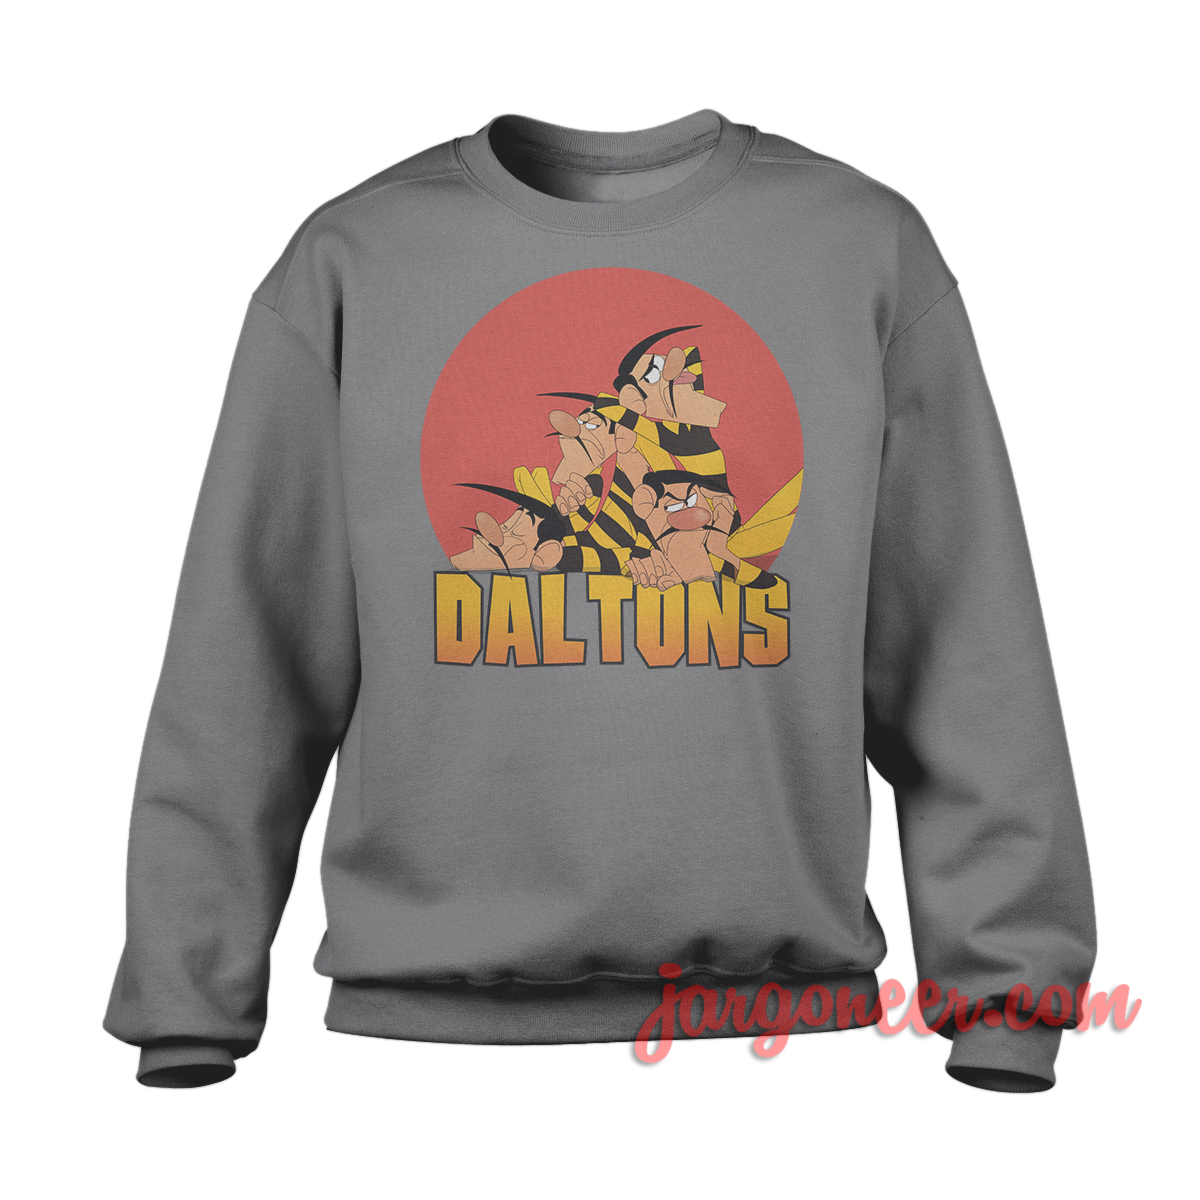 Daltons Brothers Gray SS - Shop Unique Graphic Cool Shirt Designs